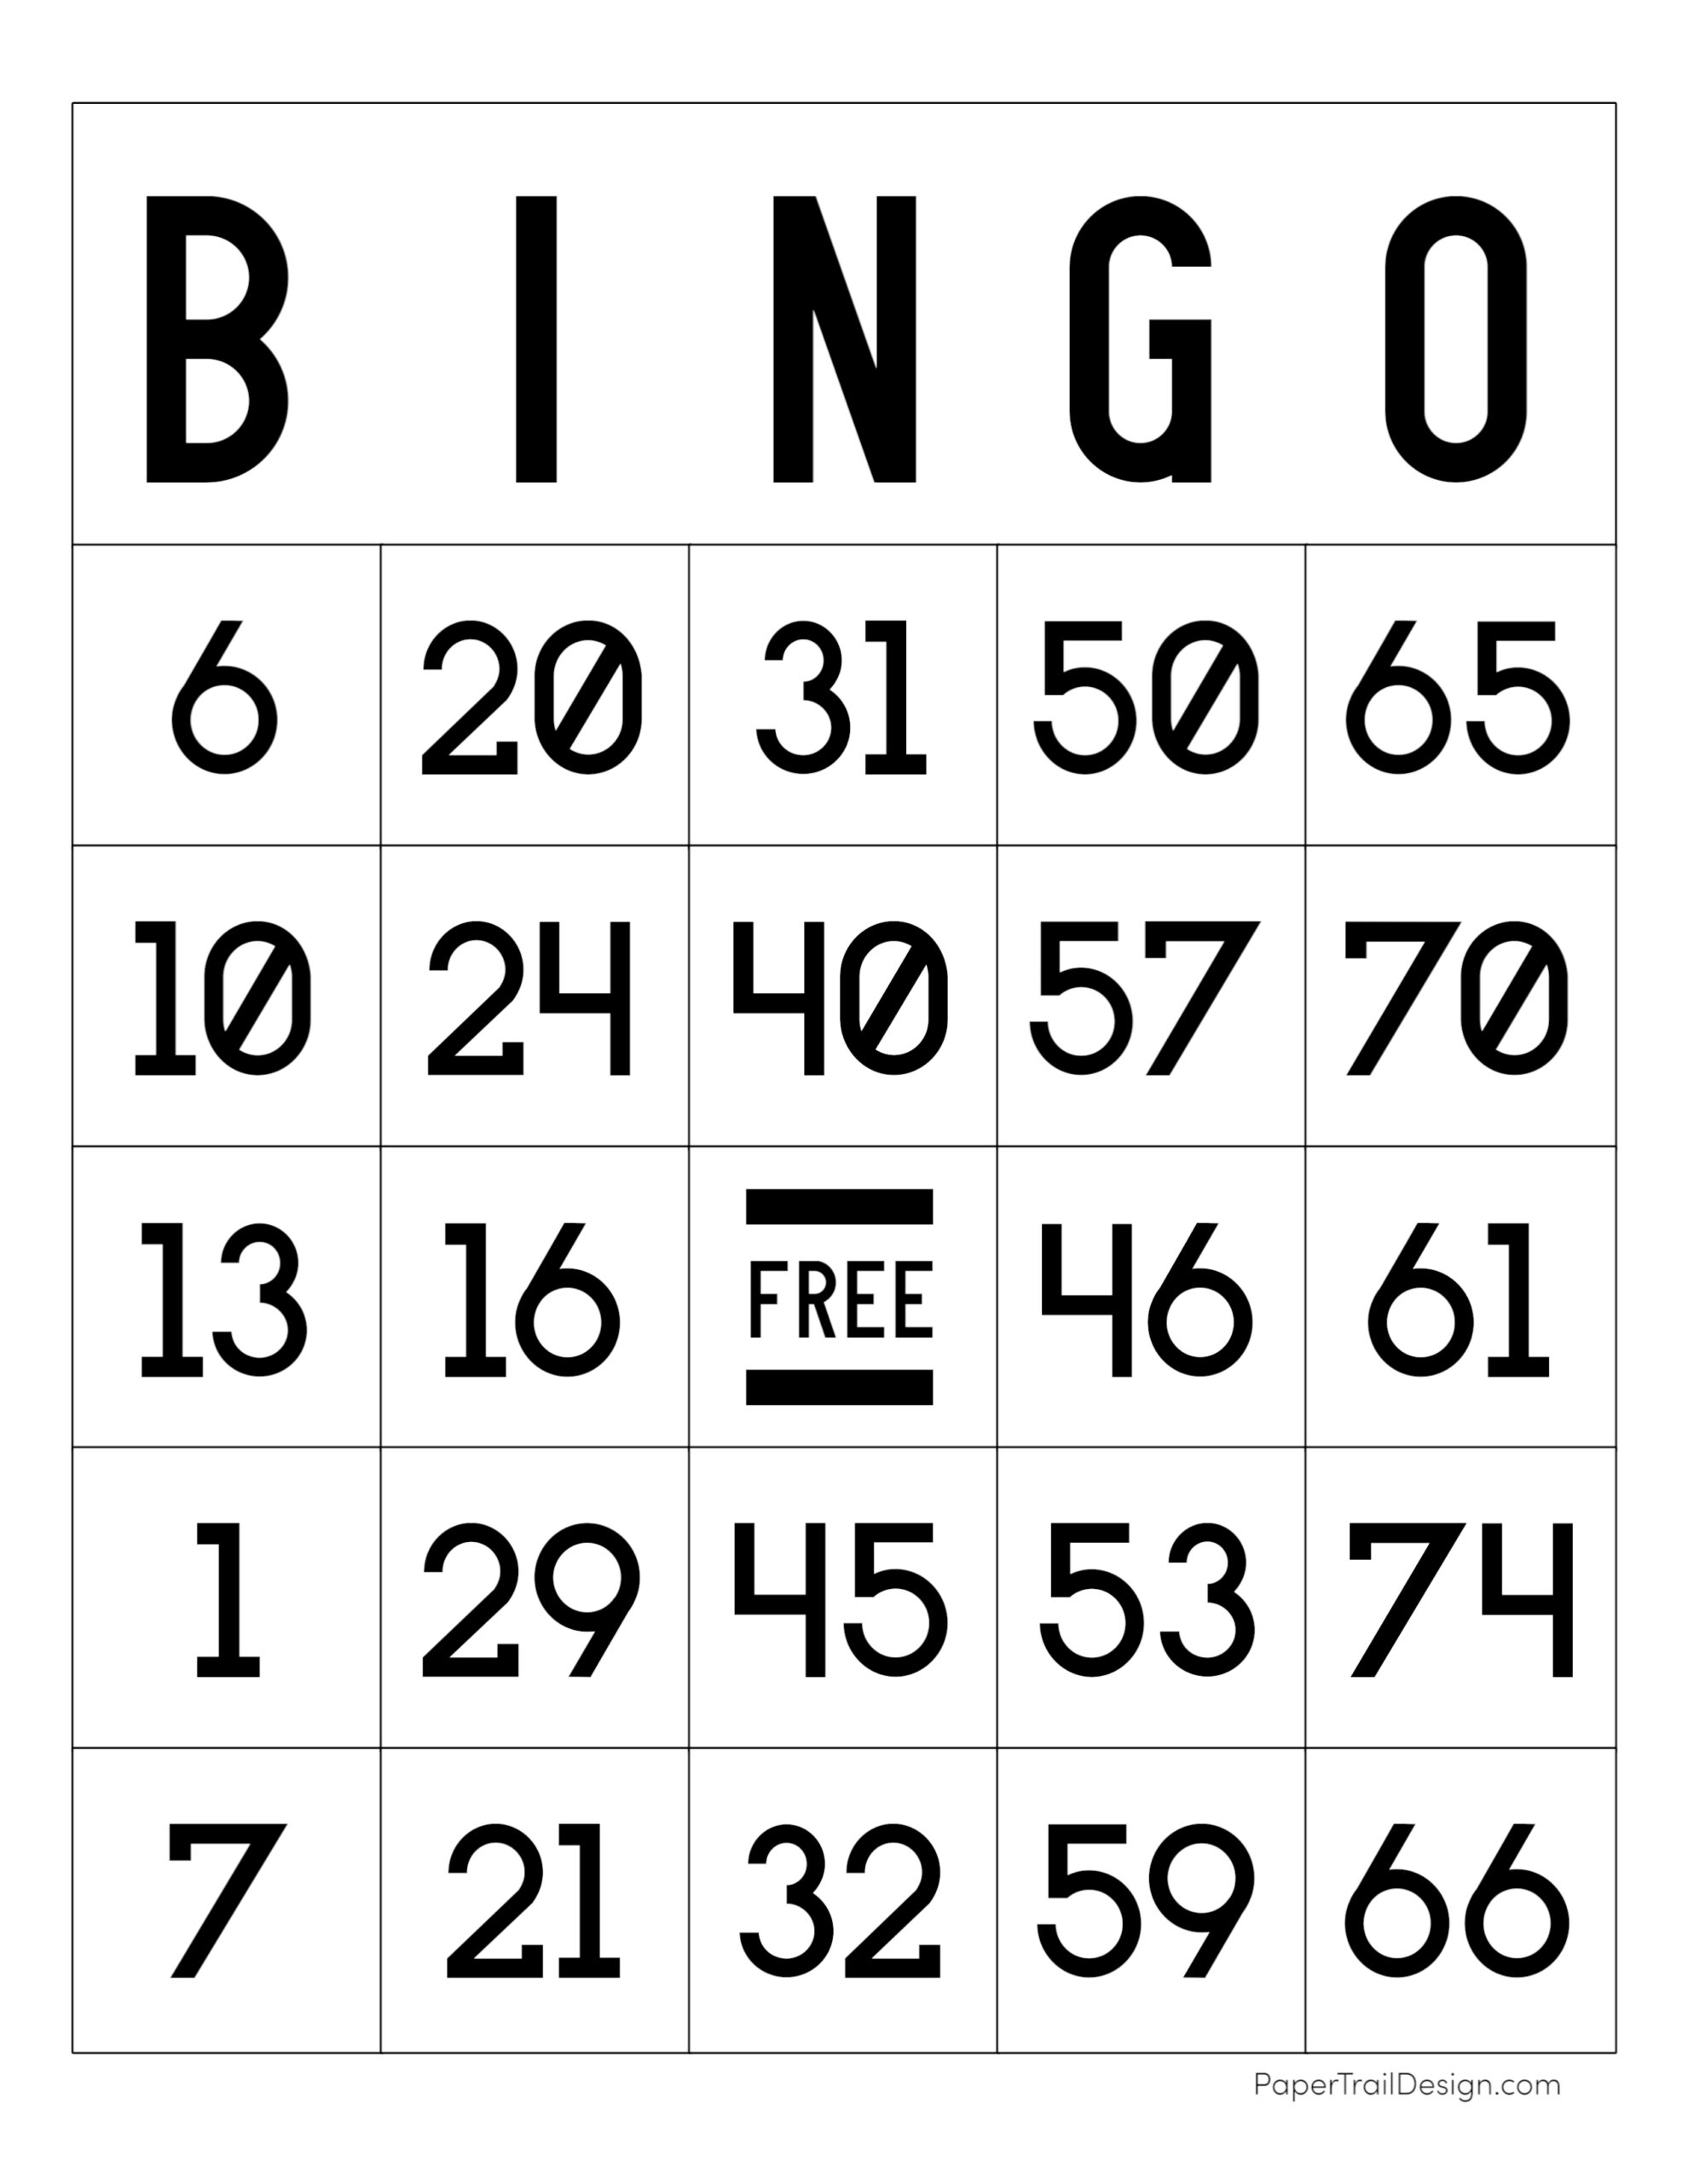 printable-bingo-card-generator